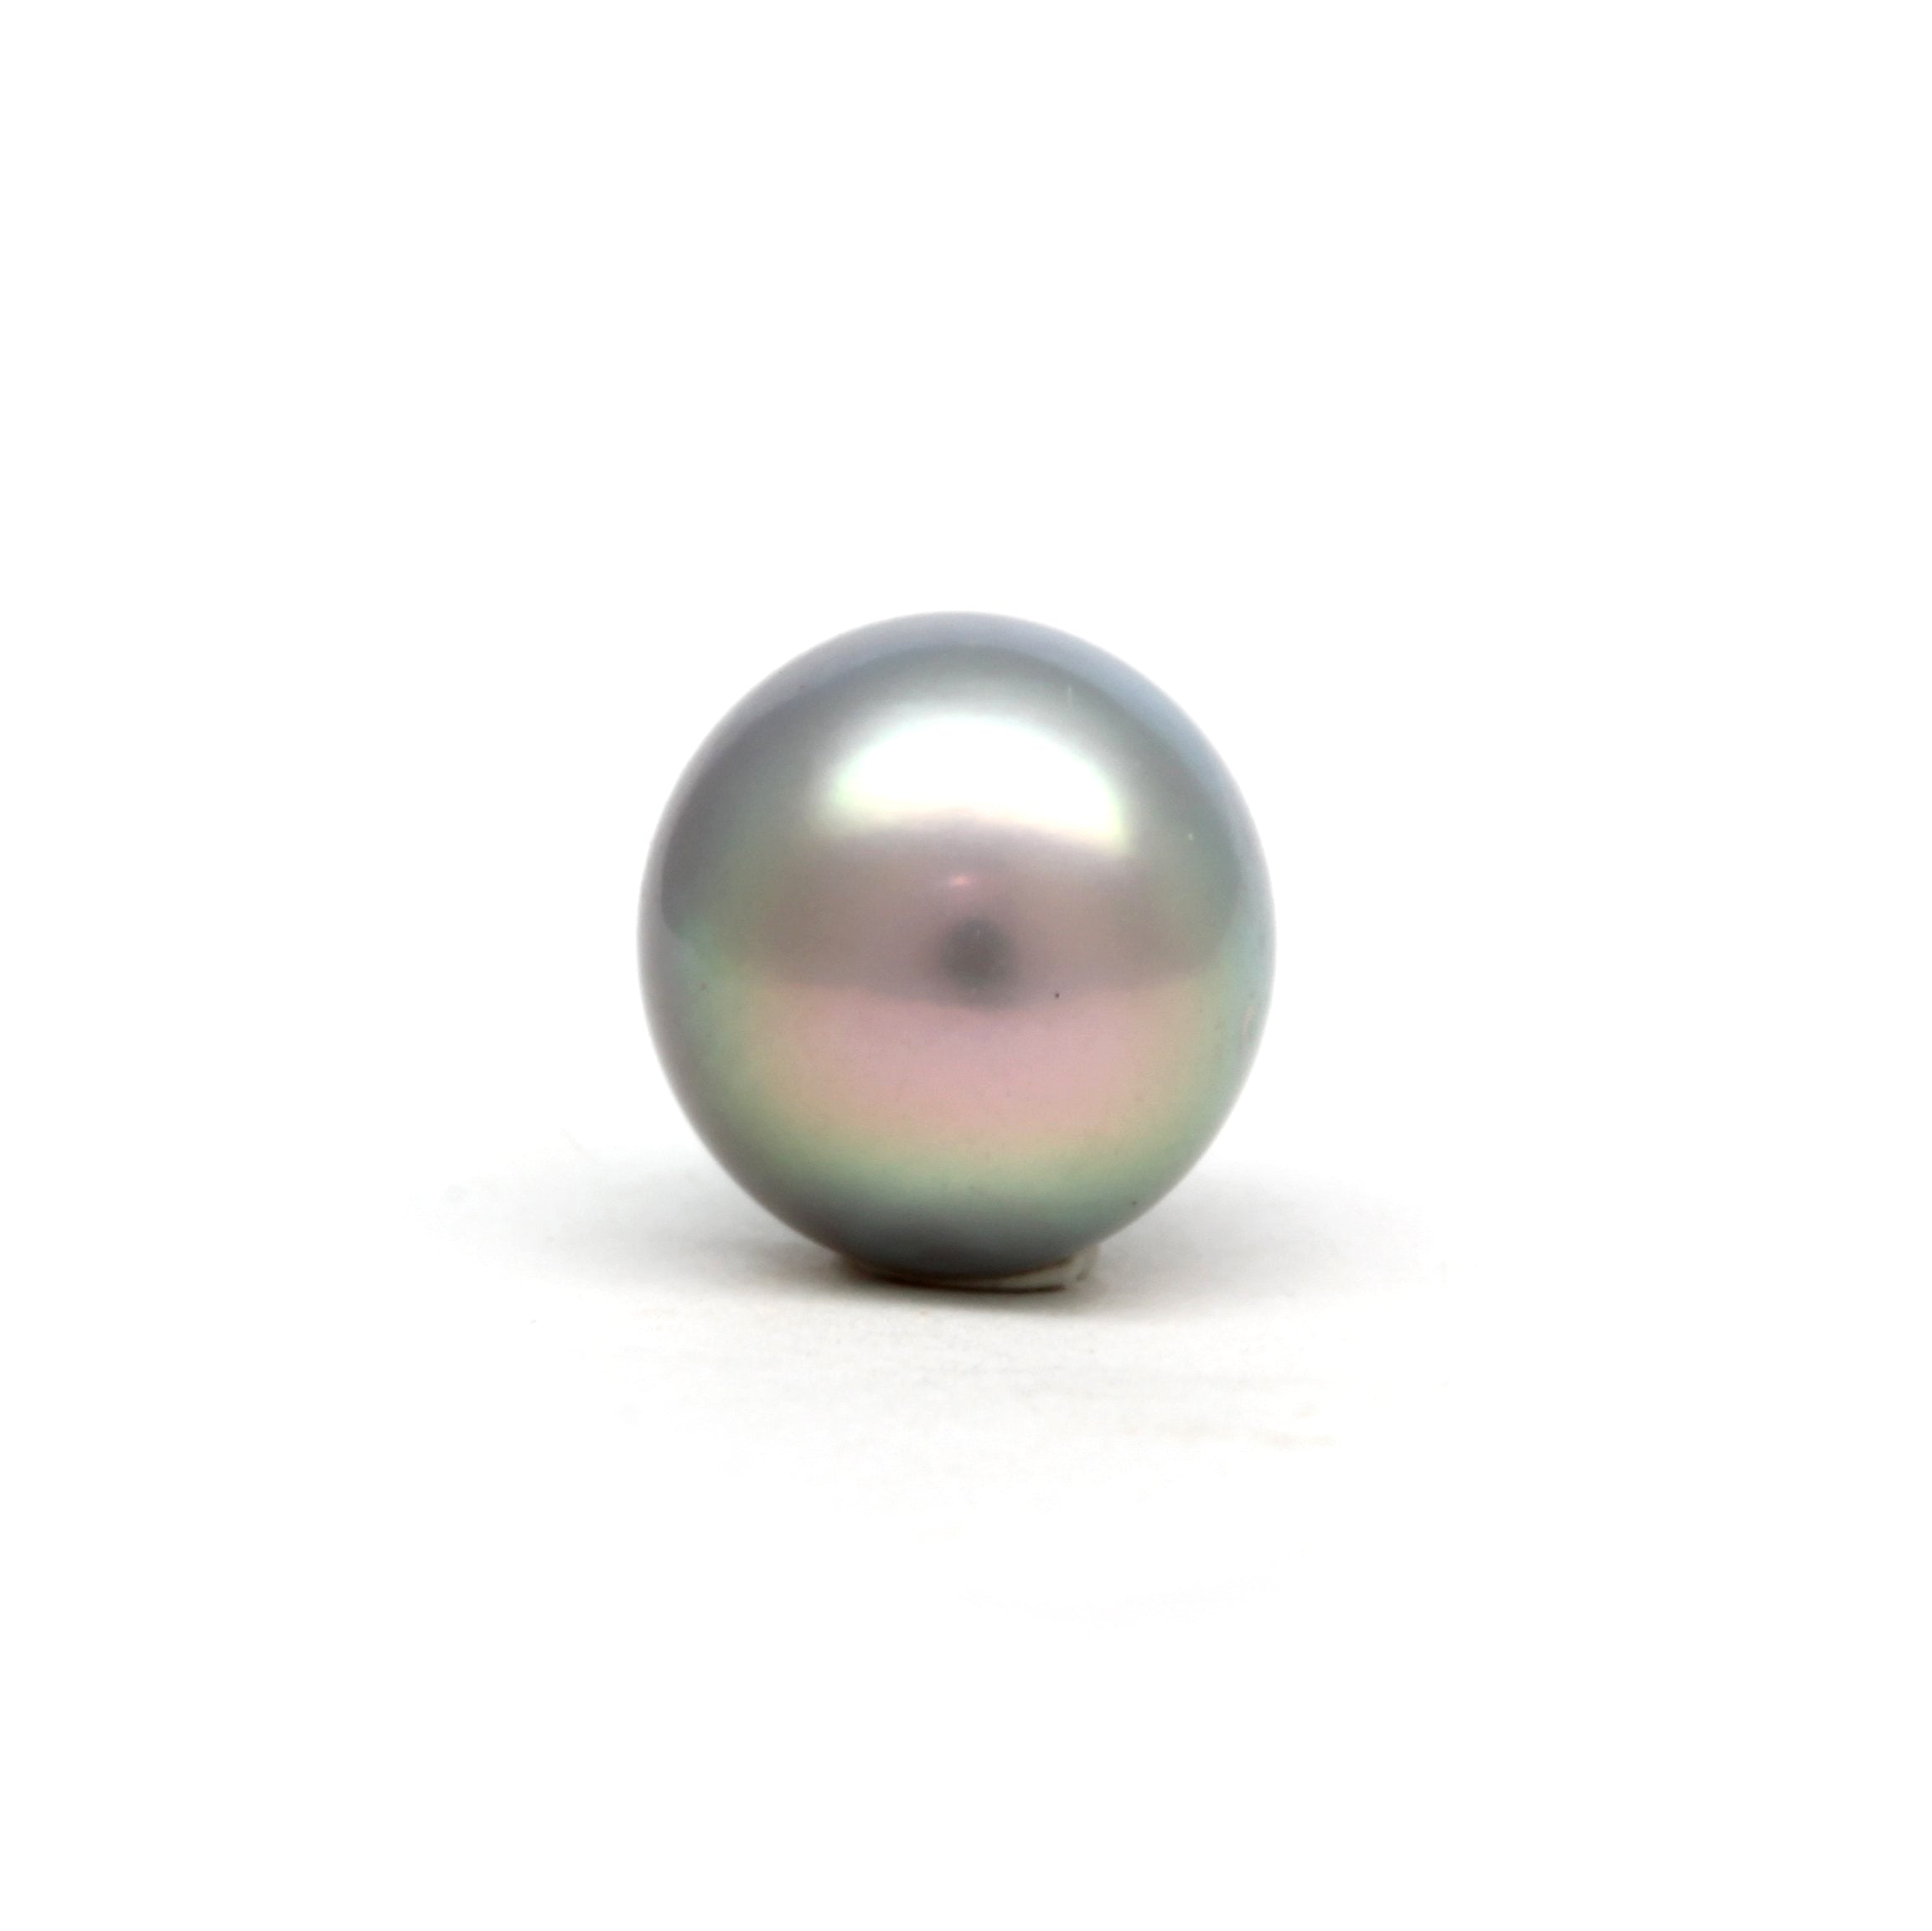 Near-Round 9.5 x 9.7 mm Cortez Pearl (P-34)